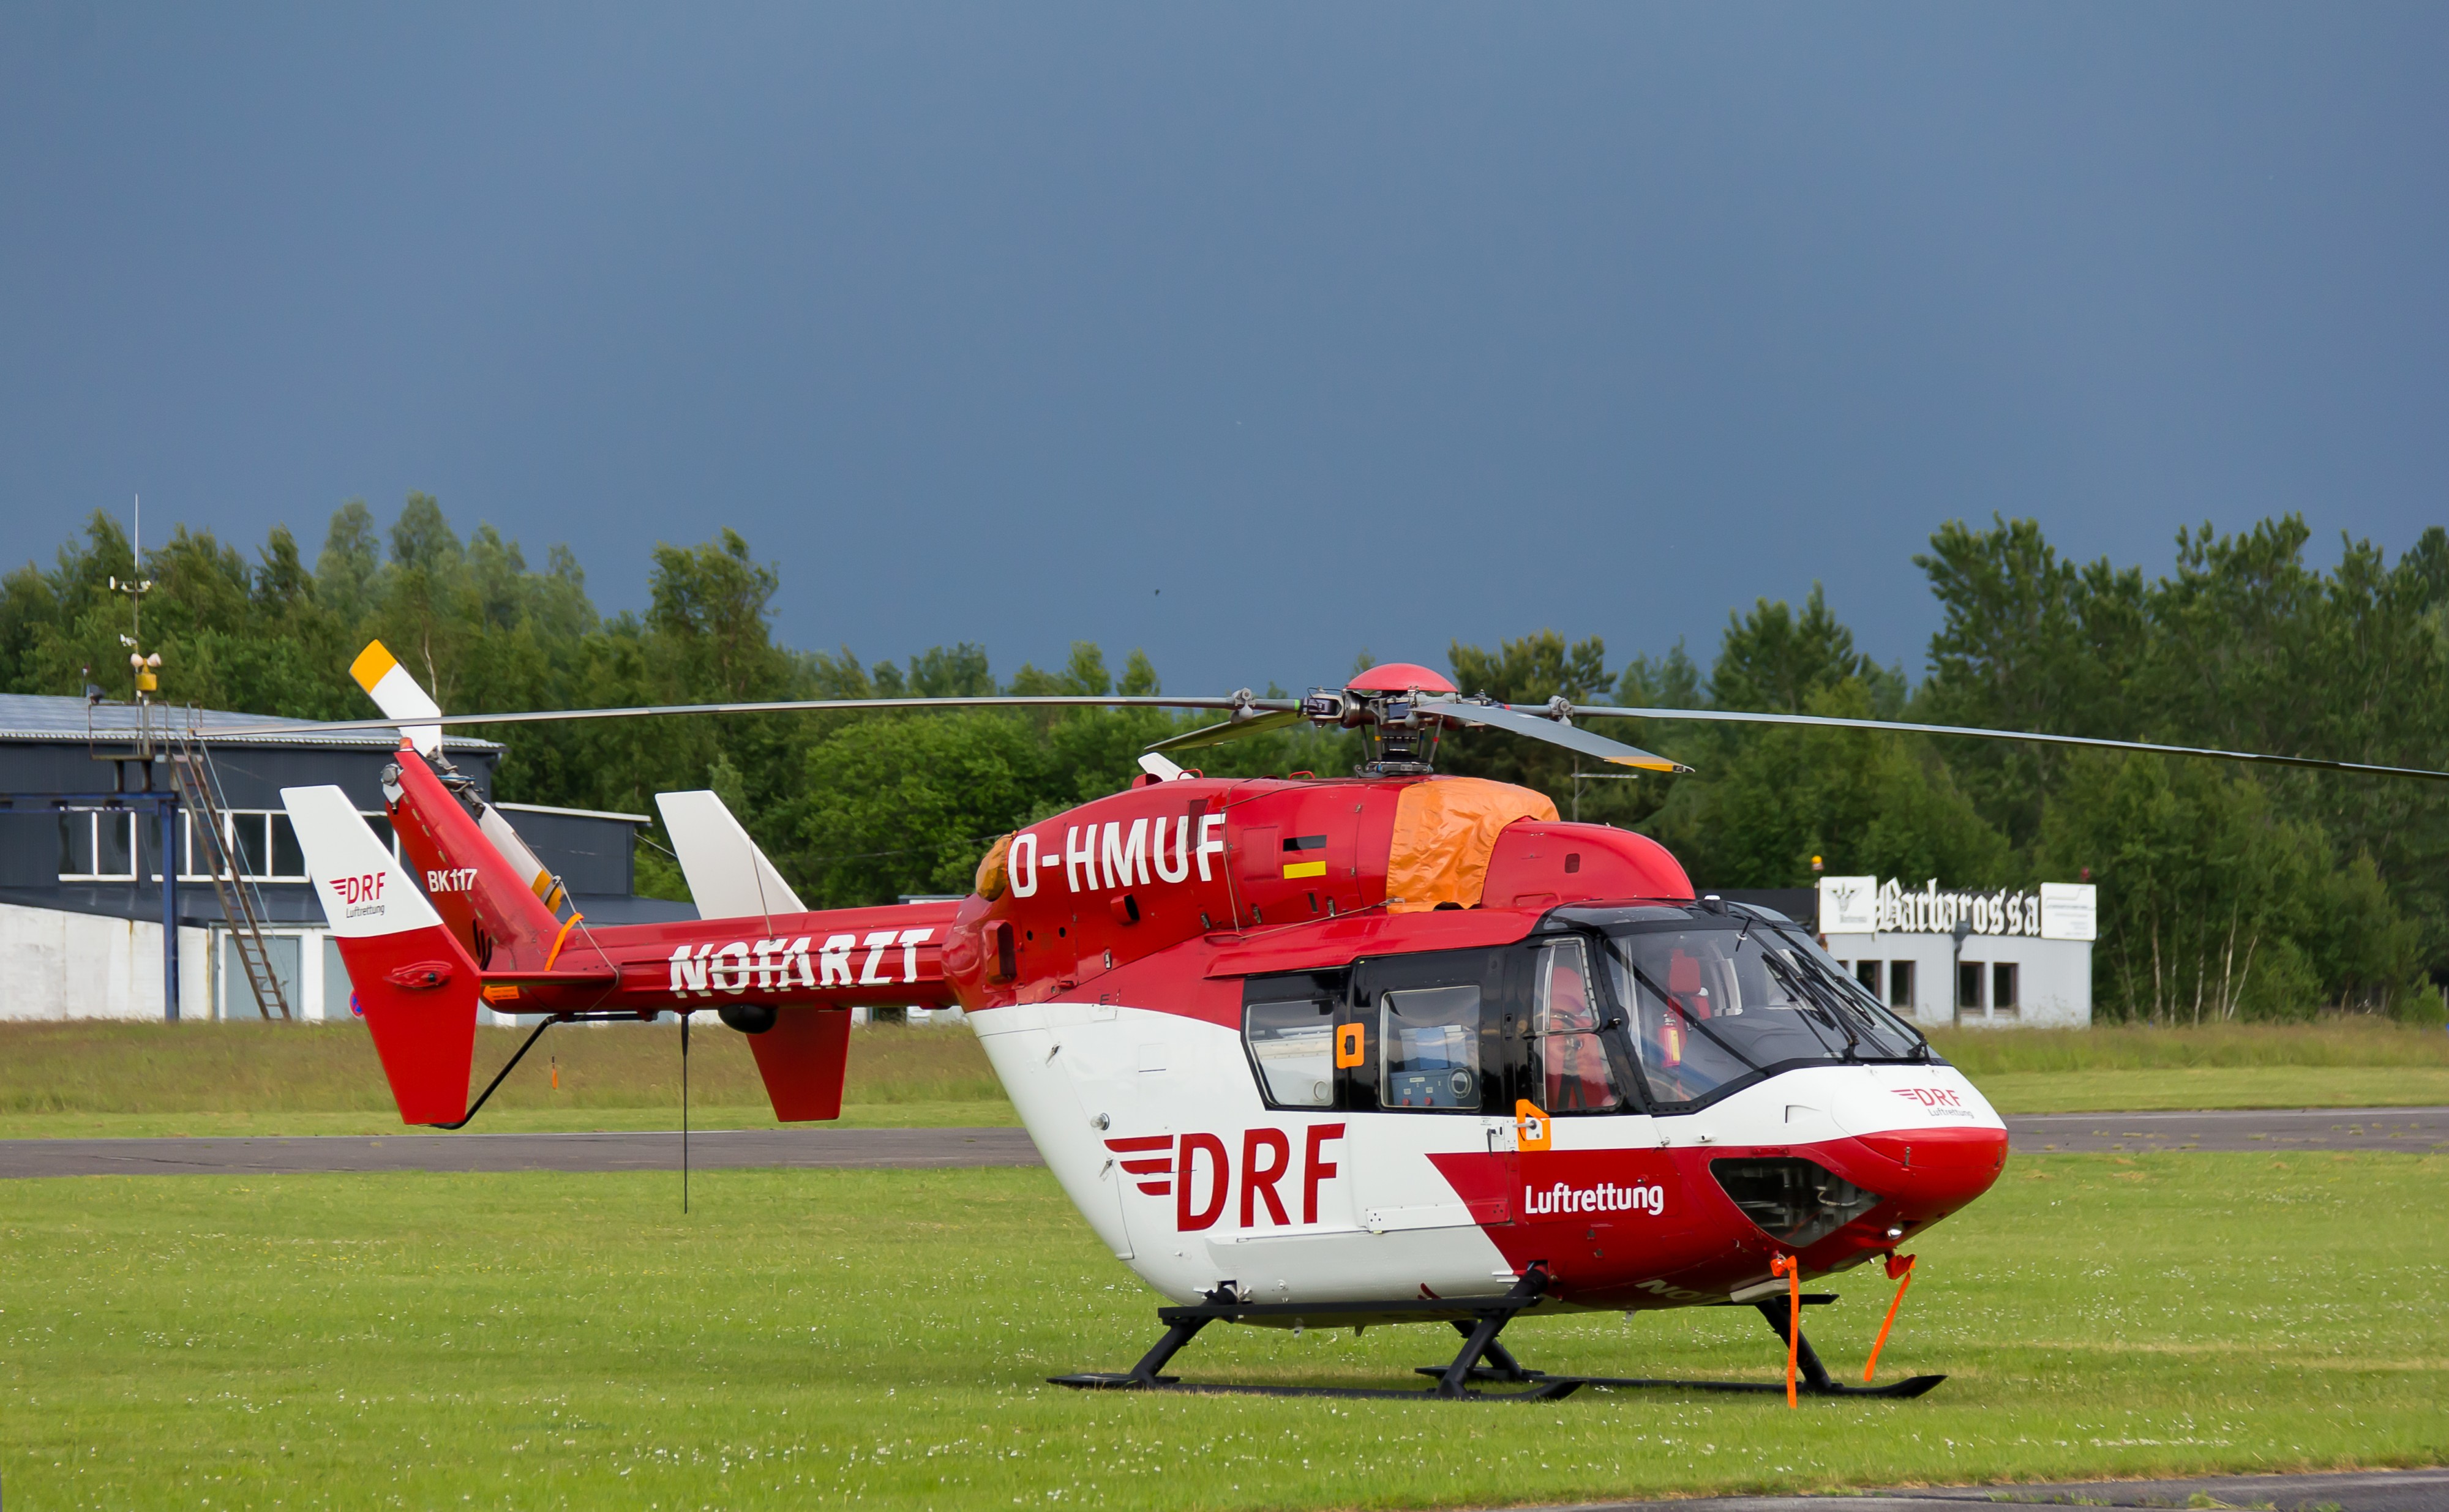 Air ambulance DRF - D-HMUF - Airport Rendsburg-Schachtholm-3467